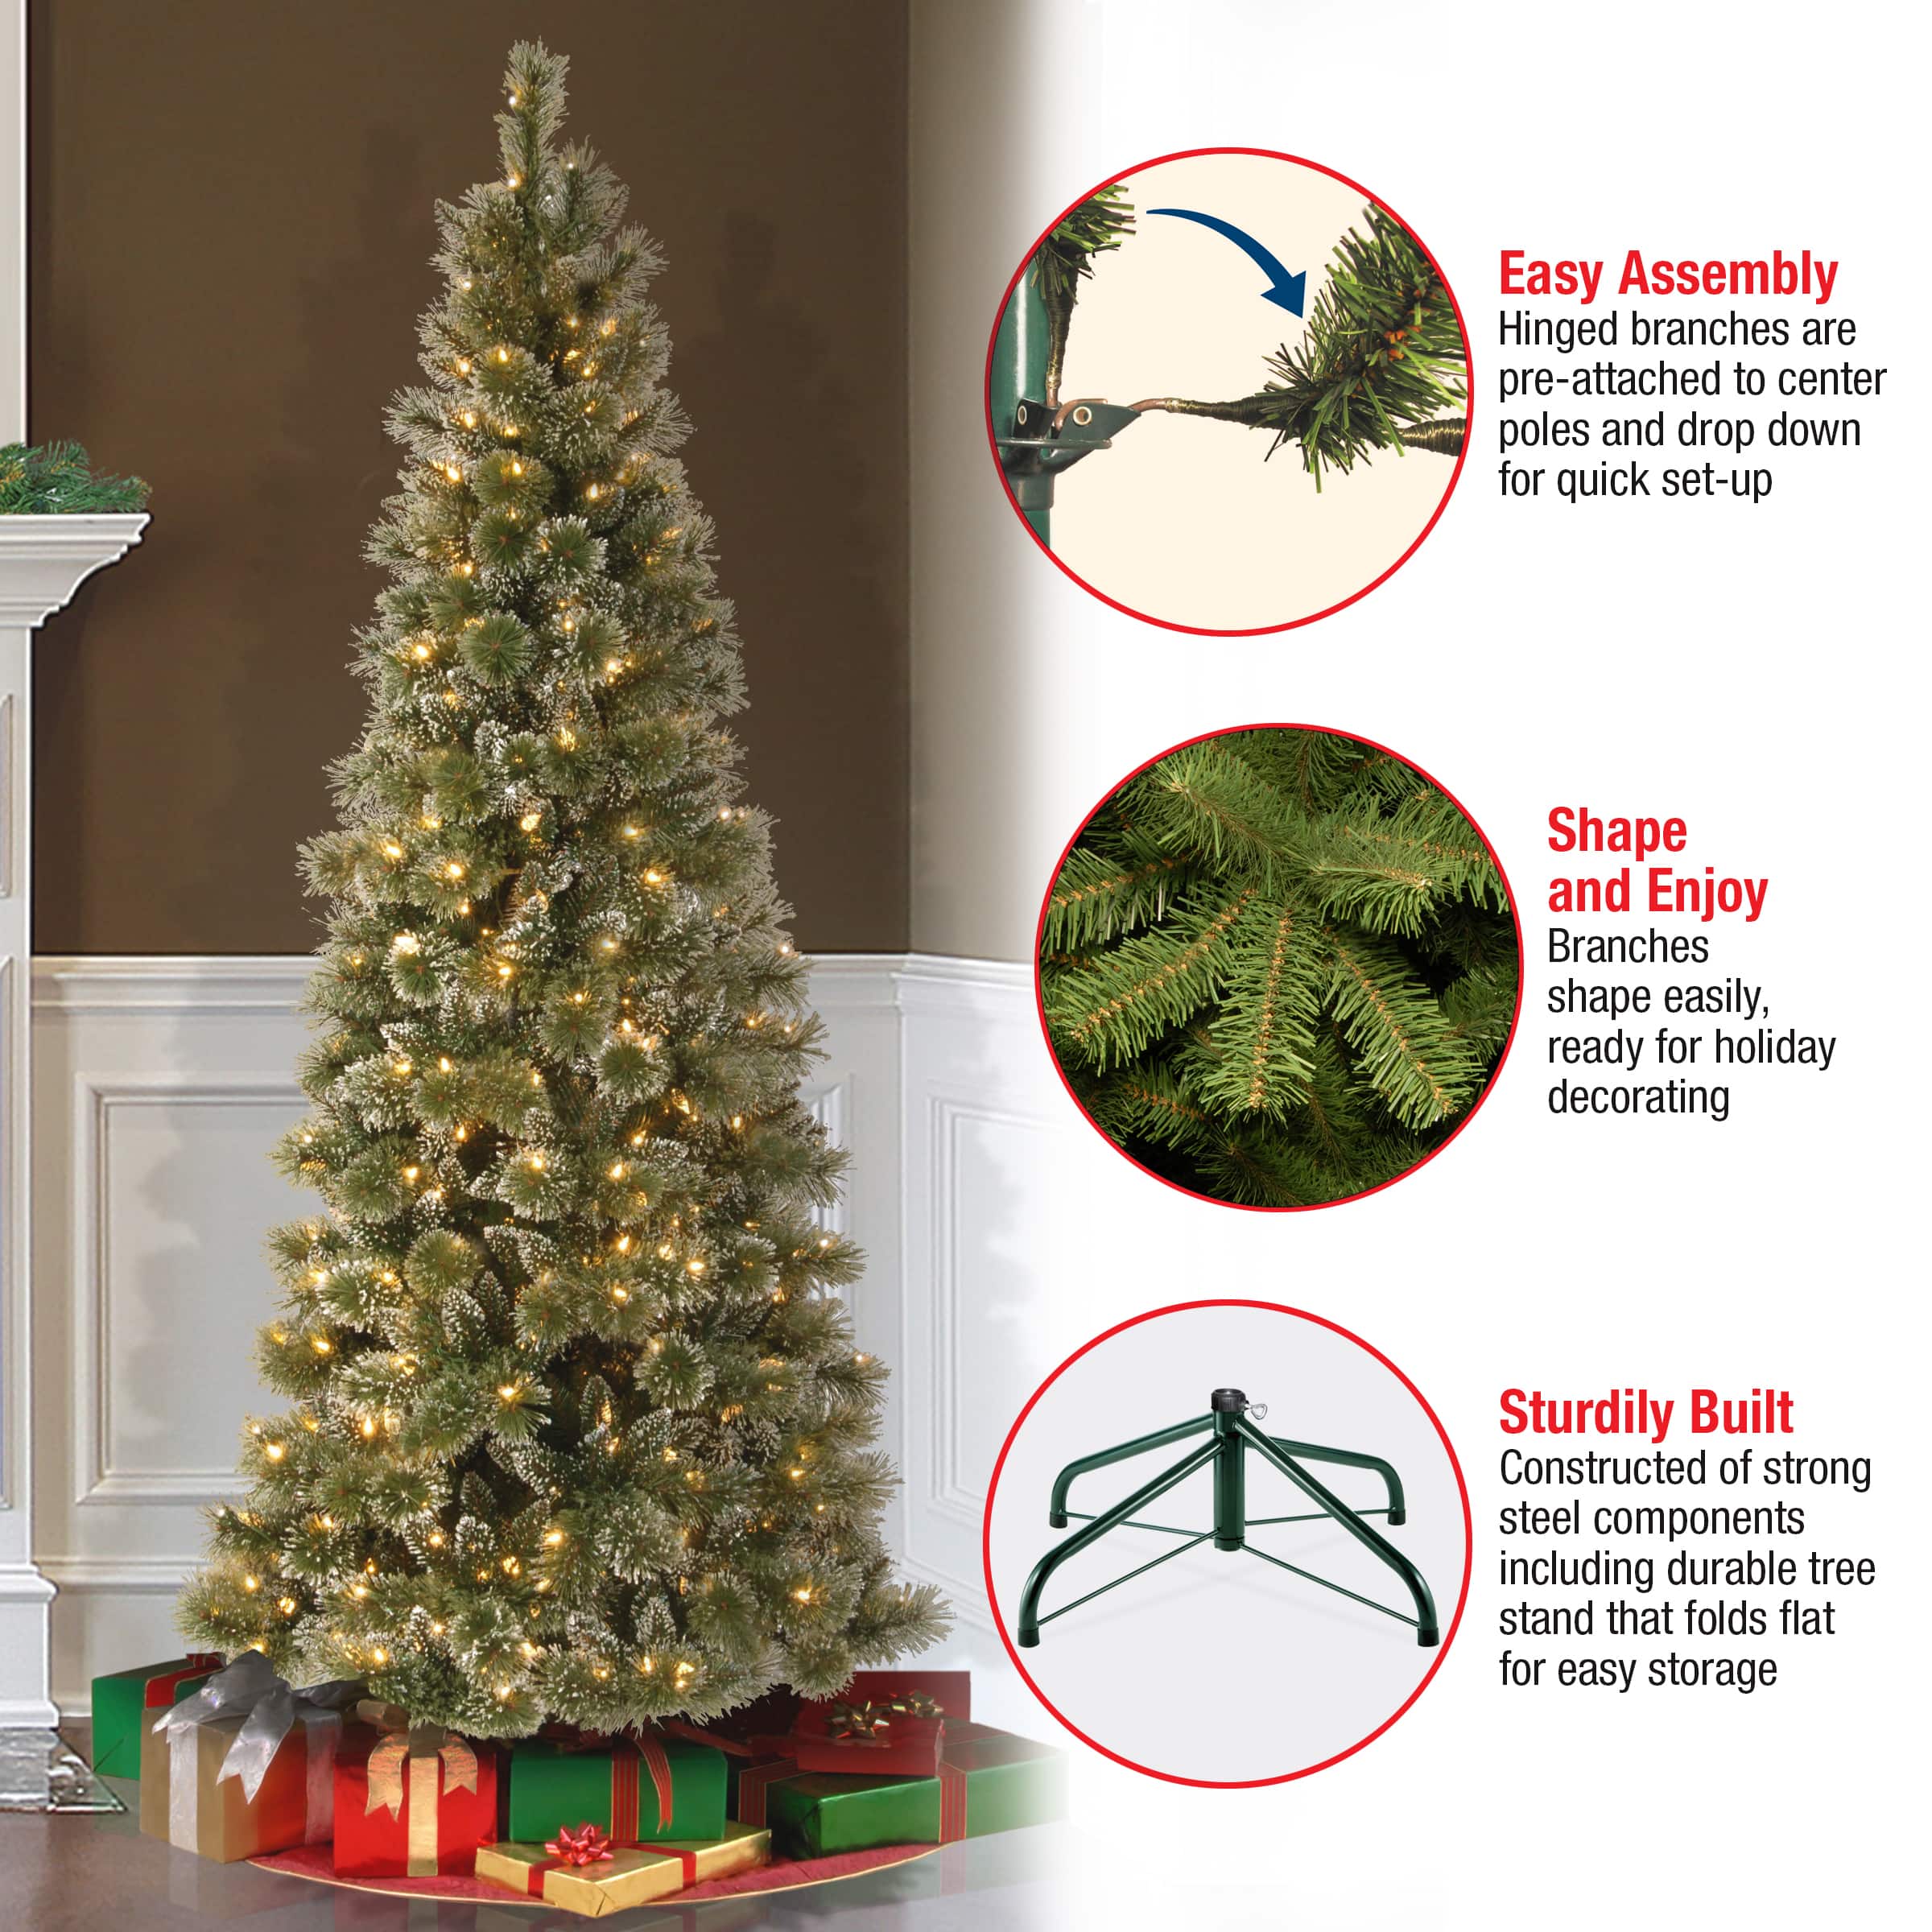 6.5 ft. Glittery Bristle Pine Slim Artificial Christmas Tree, Warm White Diamond Cap LED Lights